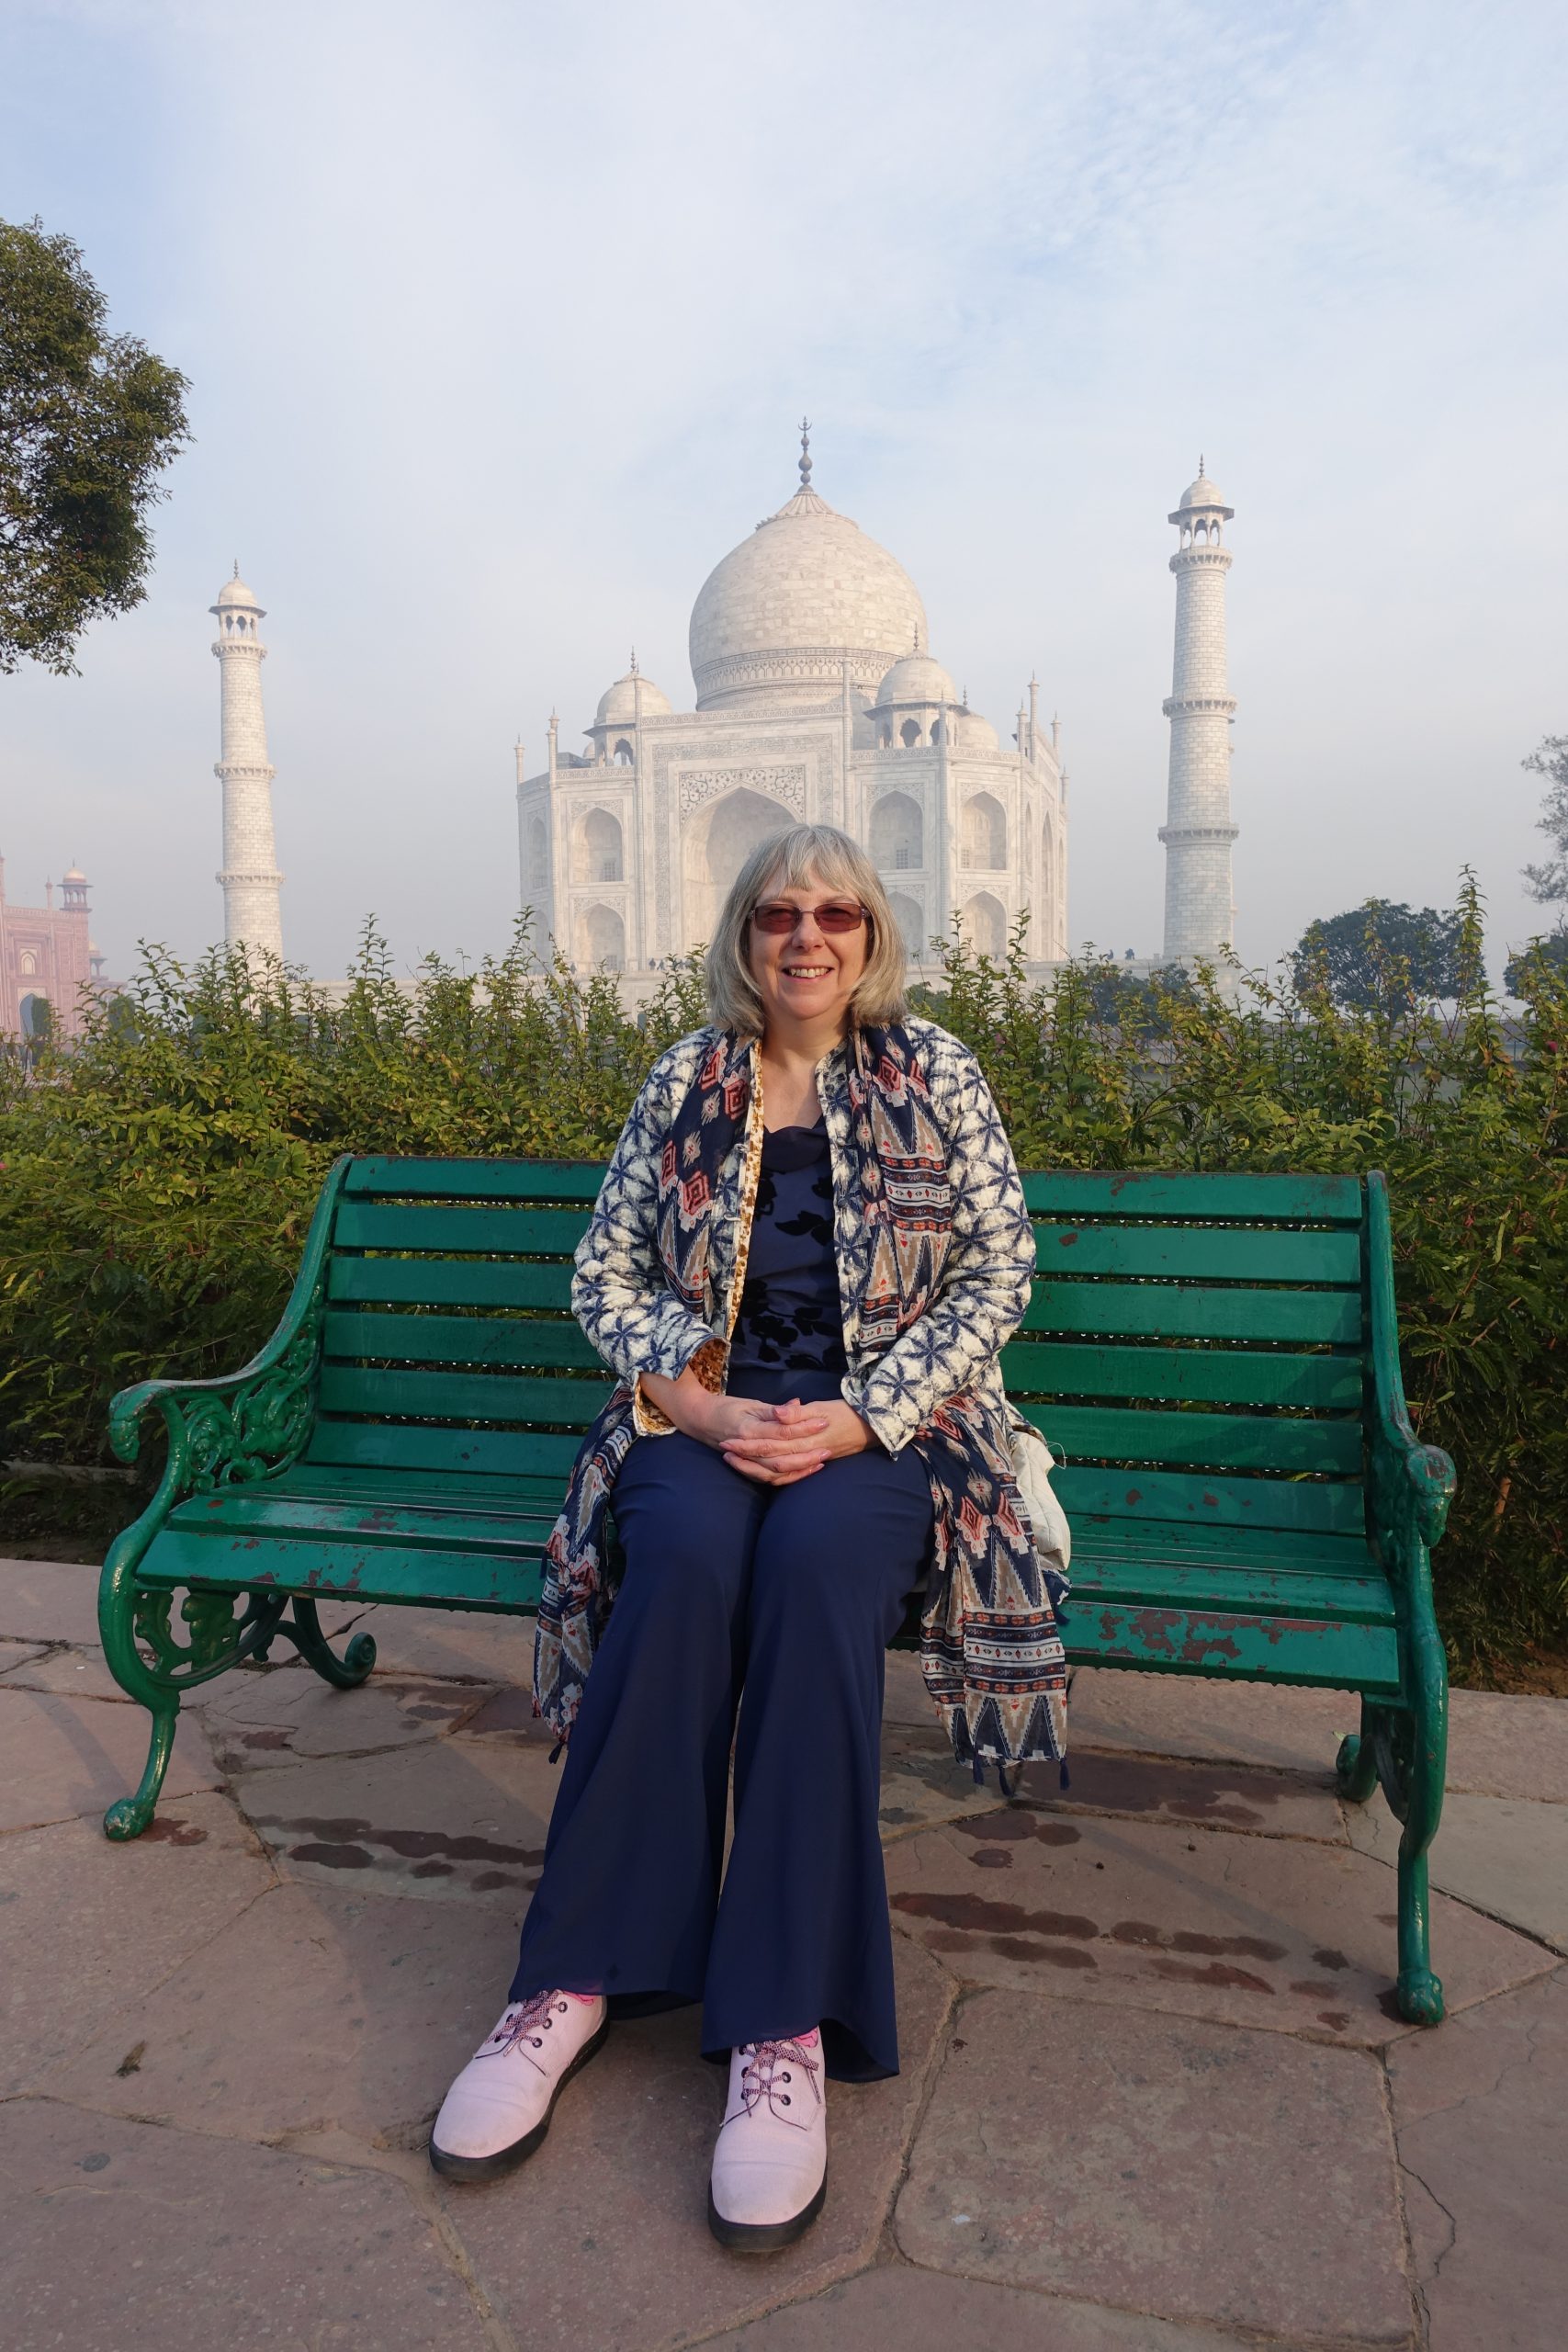 Taj Mahal - photo by Juliamaud